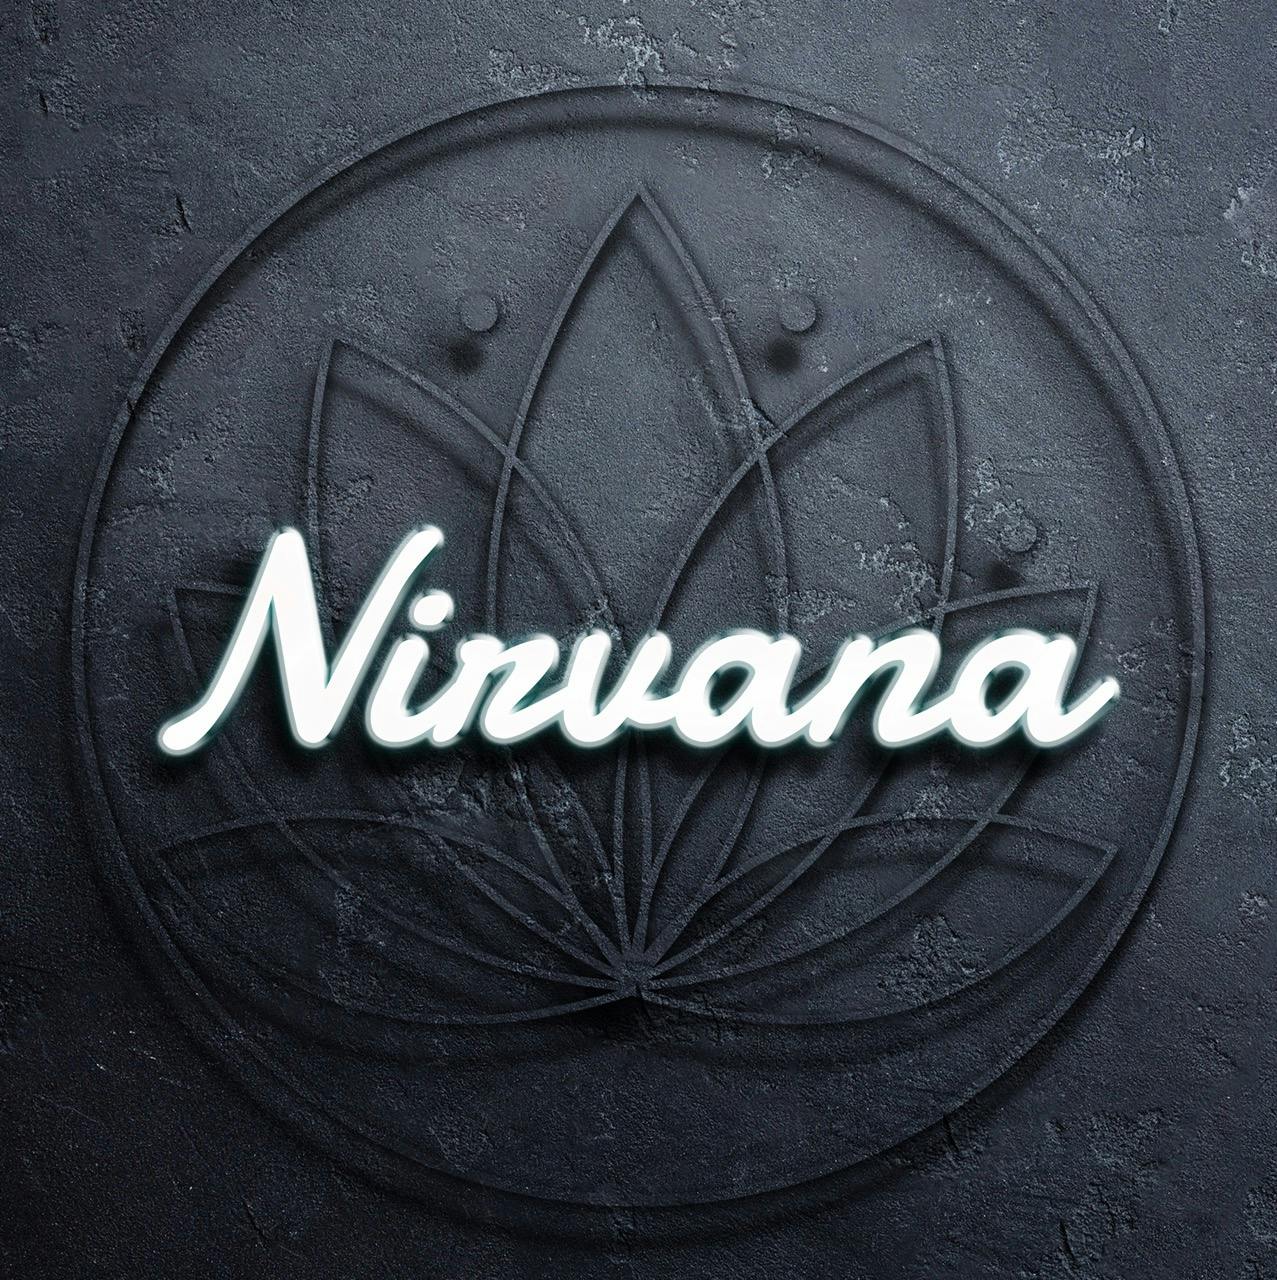 Nirvana Center - Florence (Pinal) logo